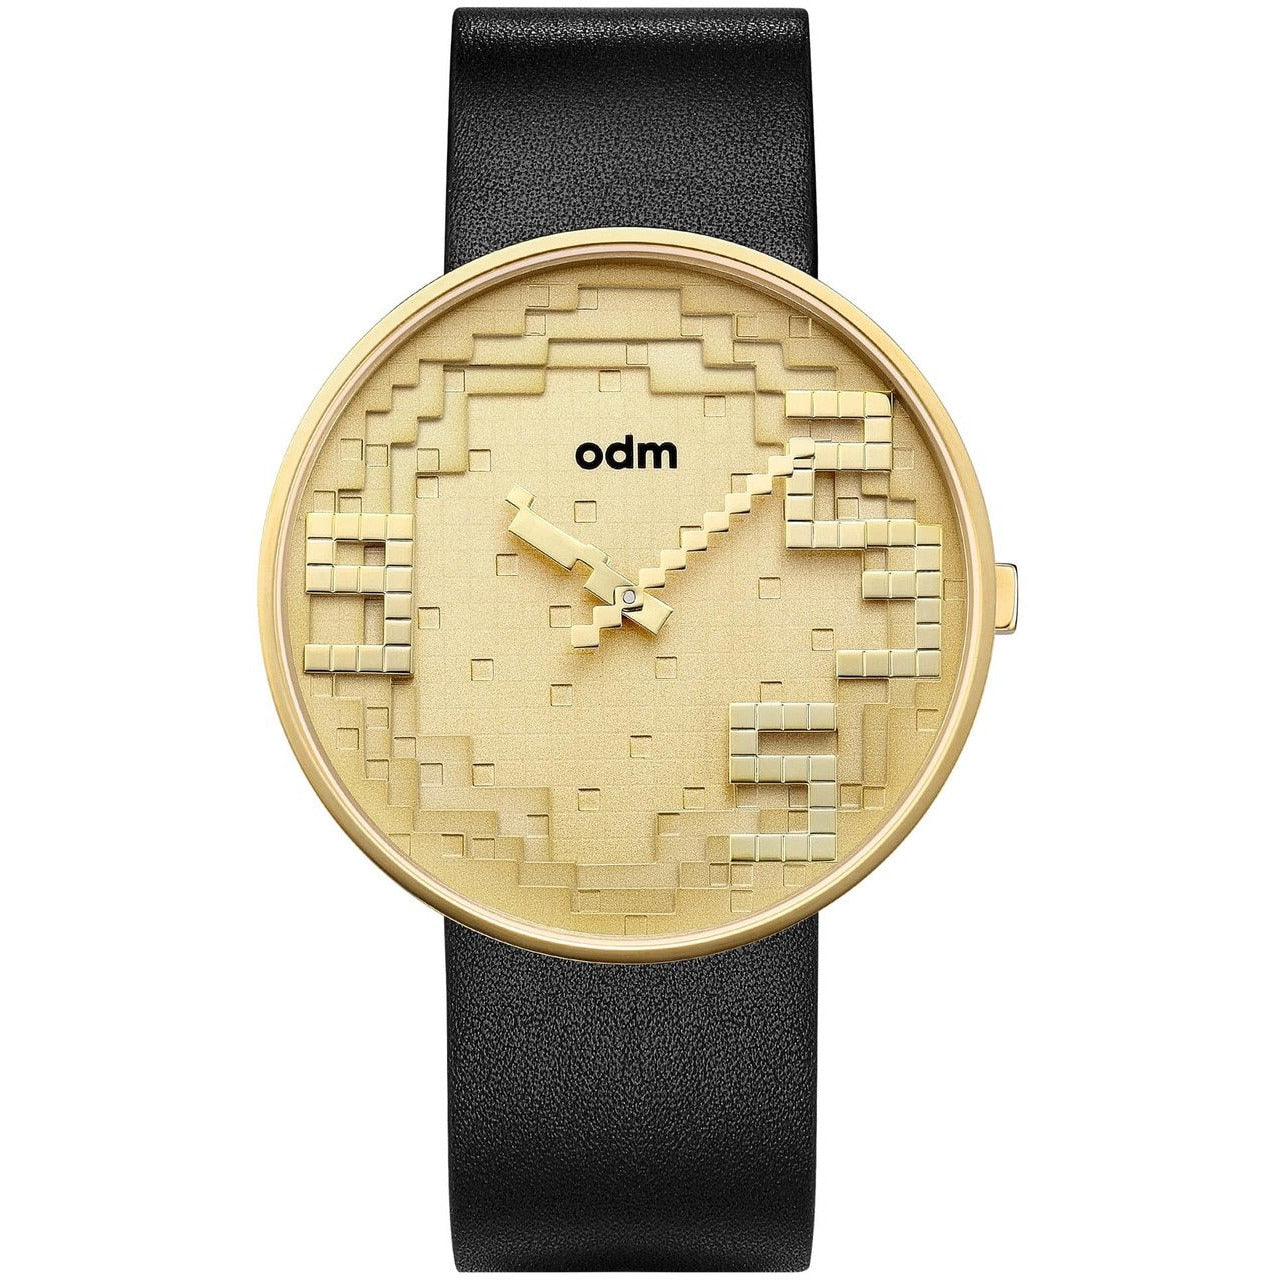 ODM Pixel Black Gold | Watches.com